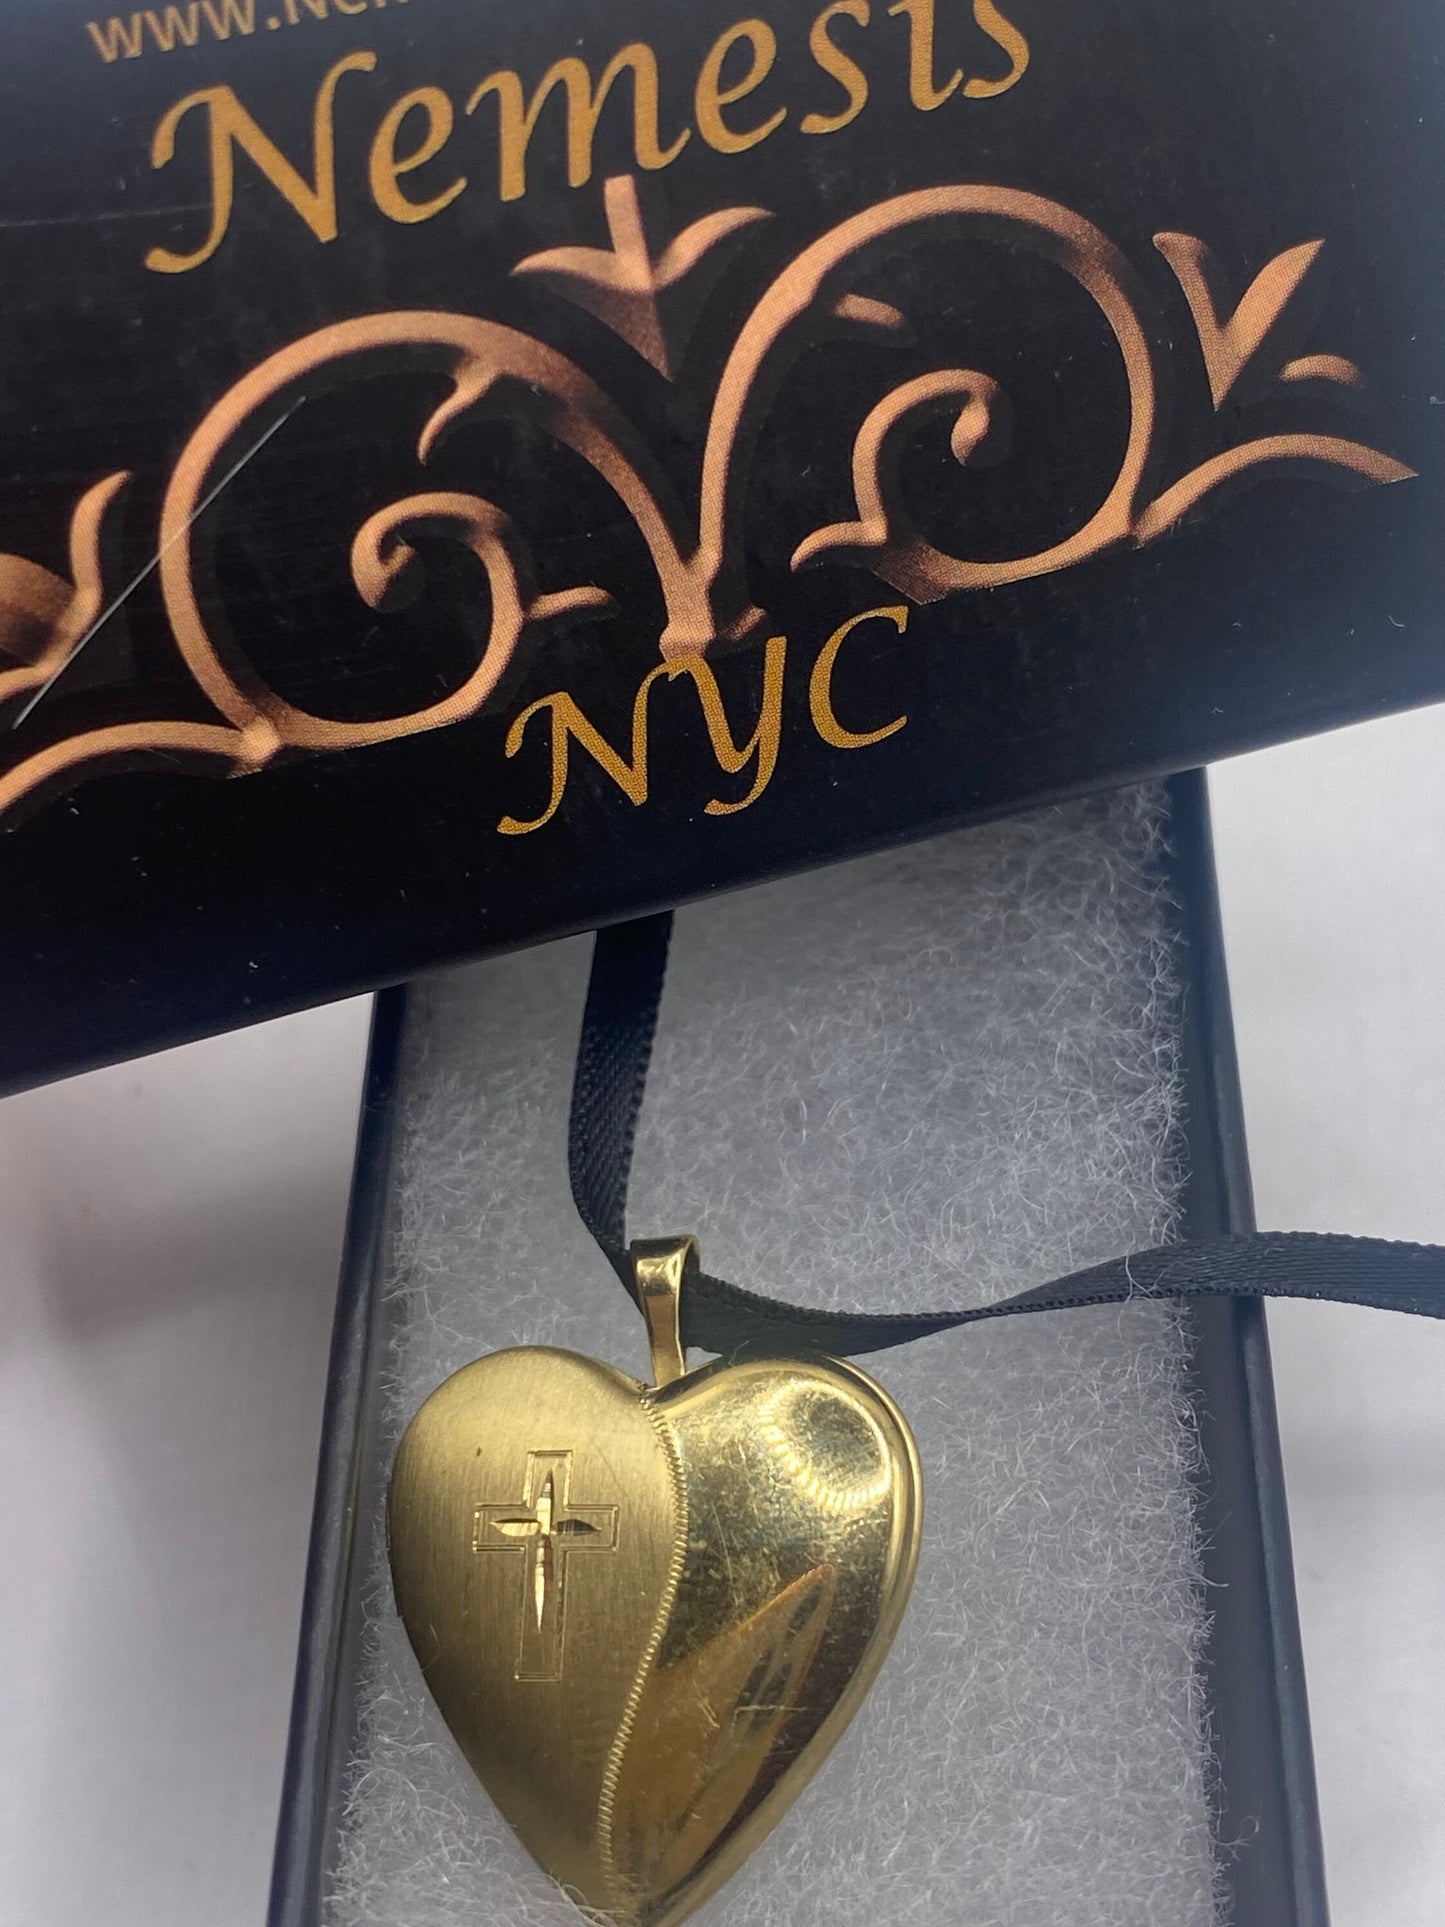 Vintage Gold Locket | Tiny Heart 9k Gold Filled Pendant Photo Memory Charm Engraved Cross | Choker Necklace